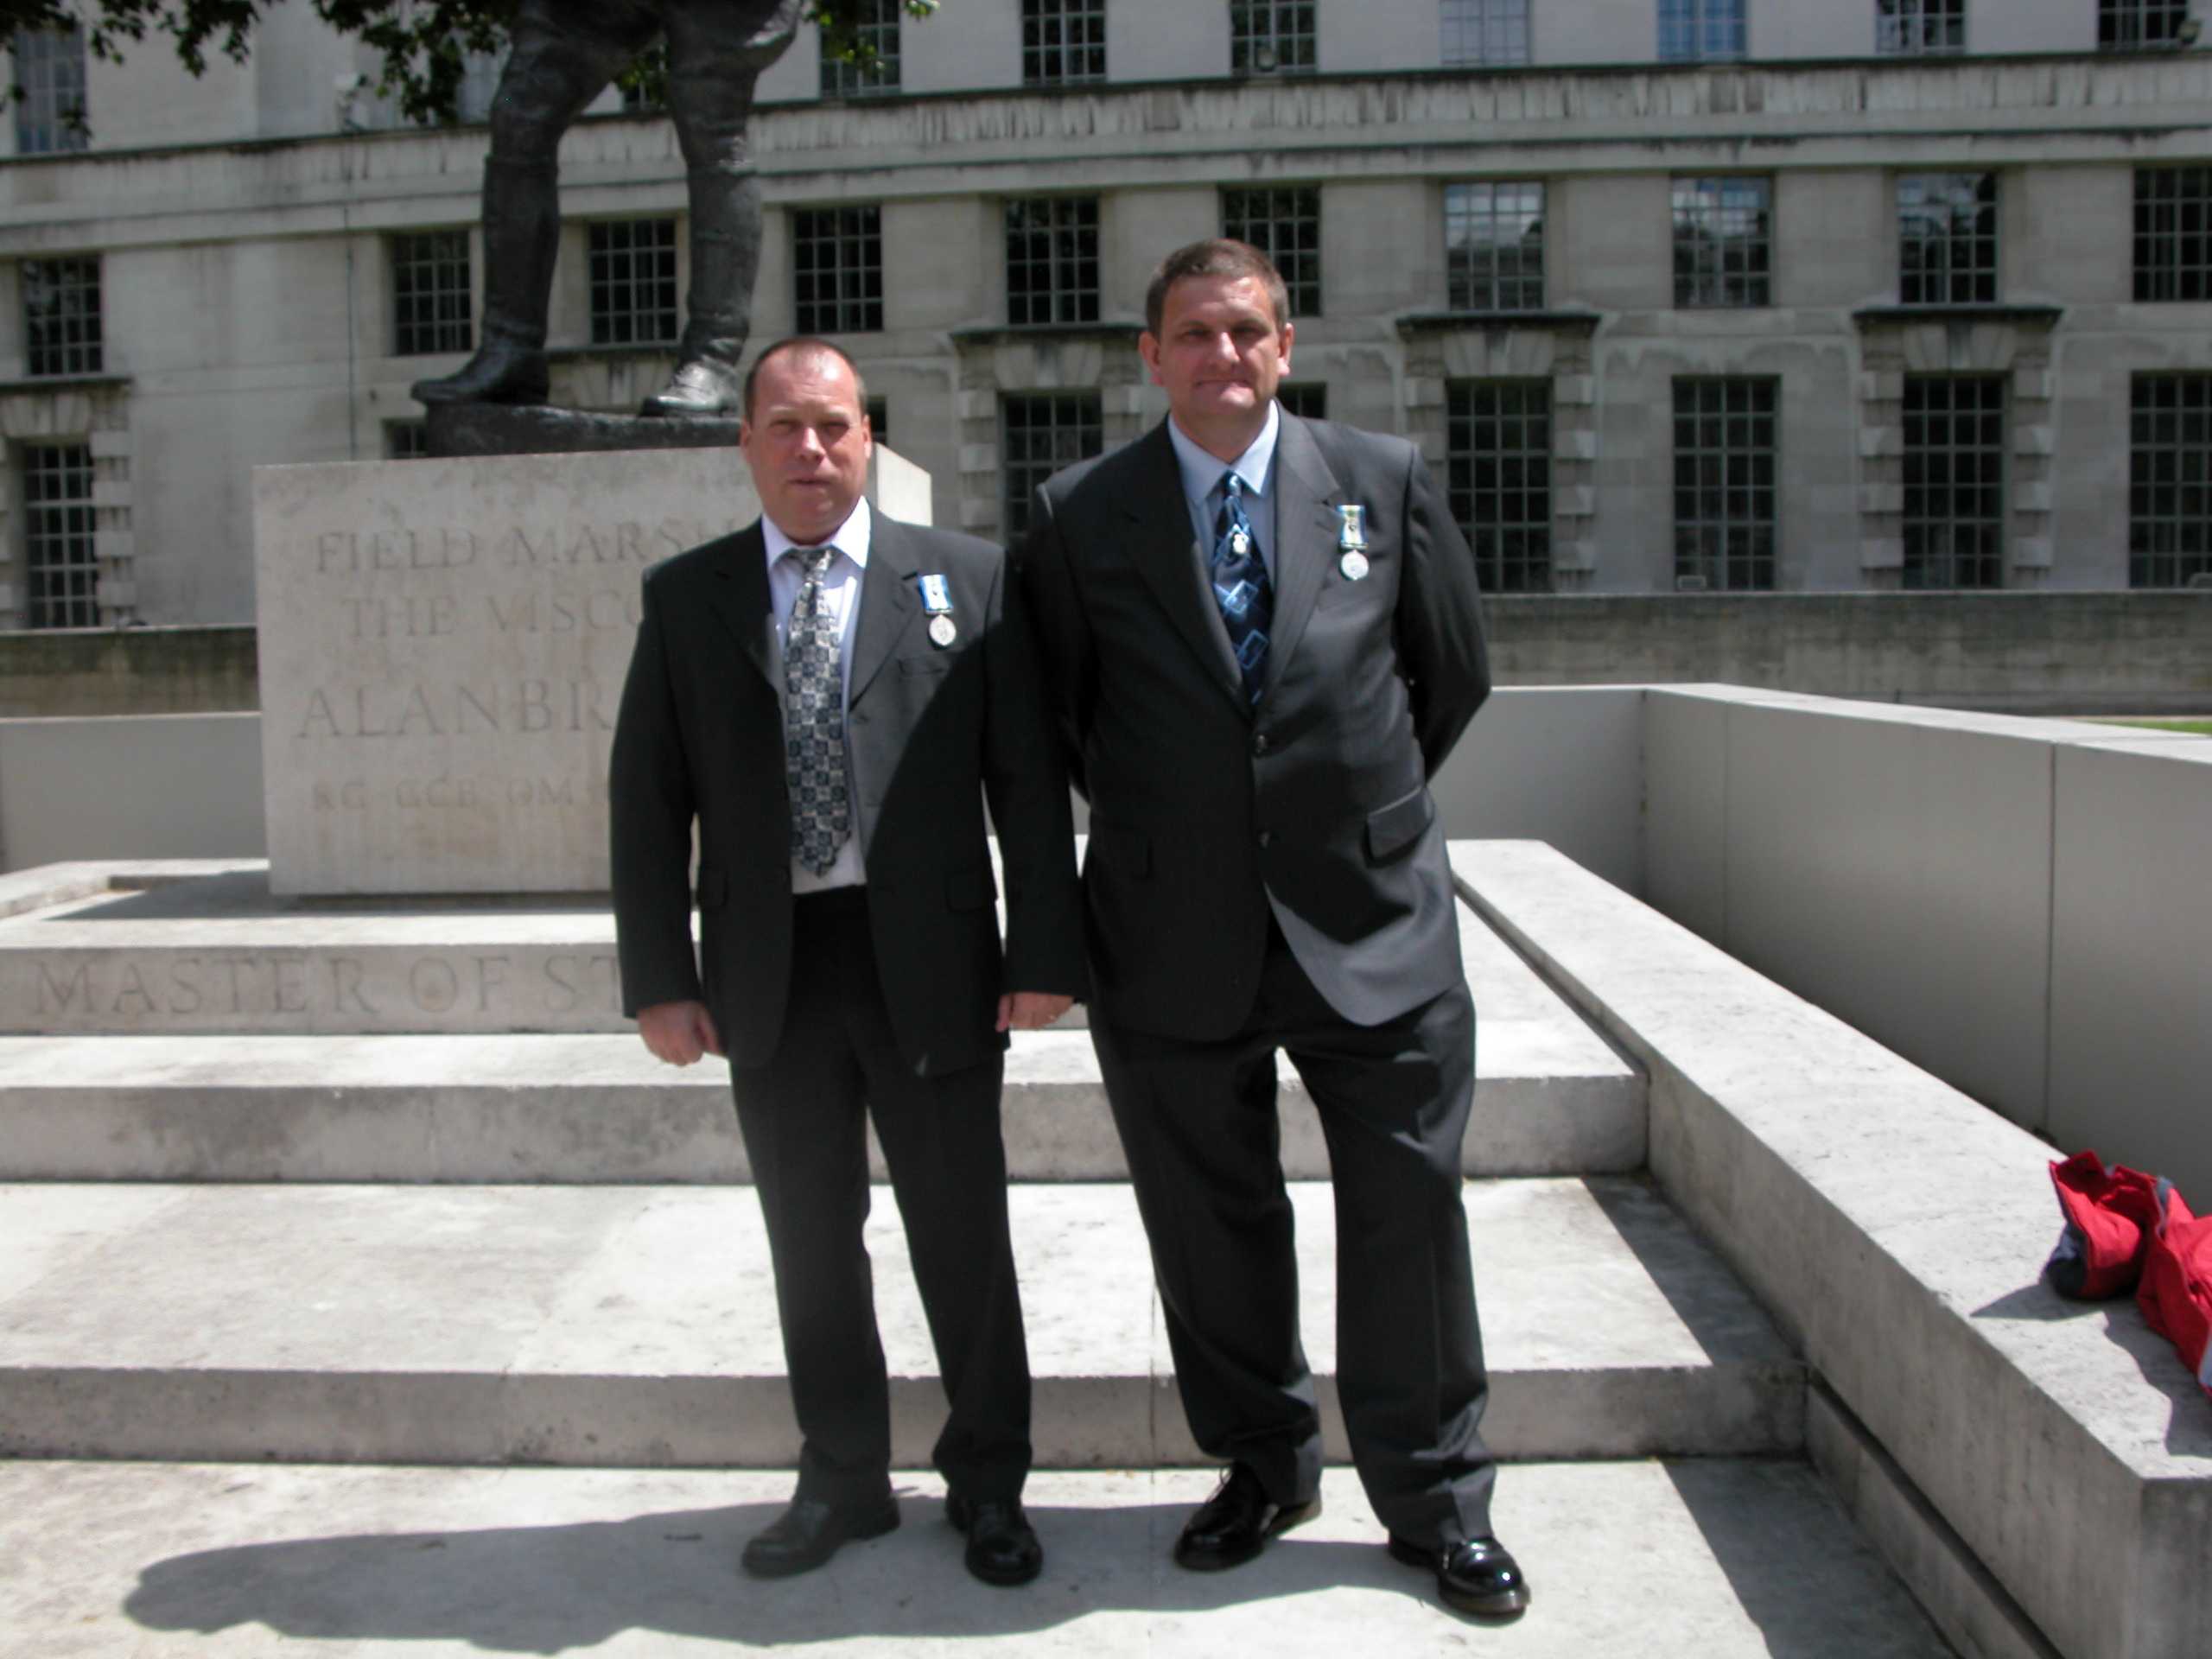 Neil Wilkinson and Ian at the Buckingham Palace, London, England